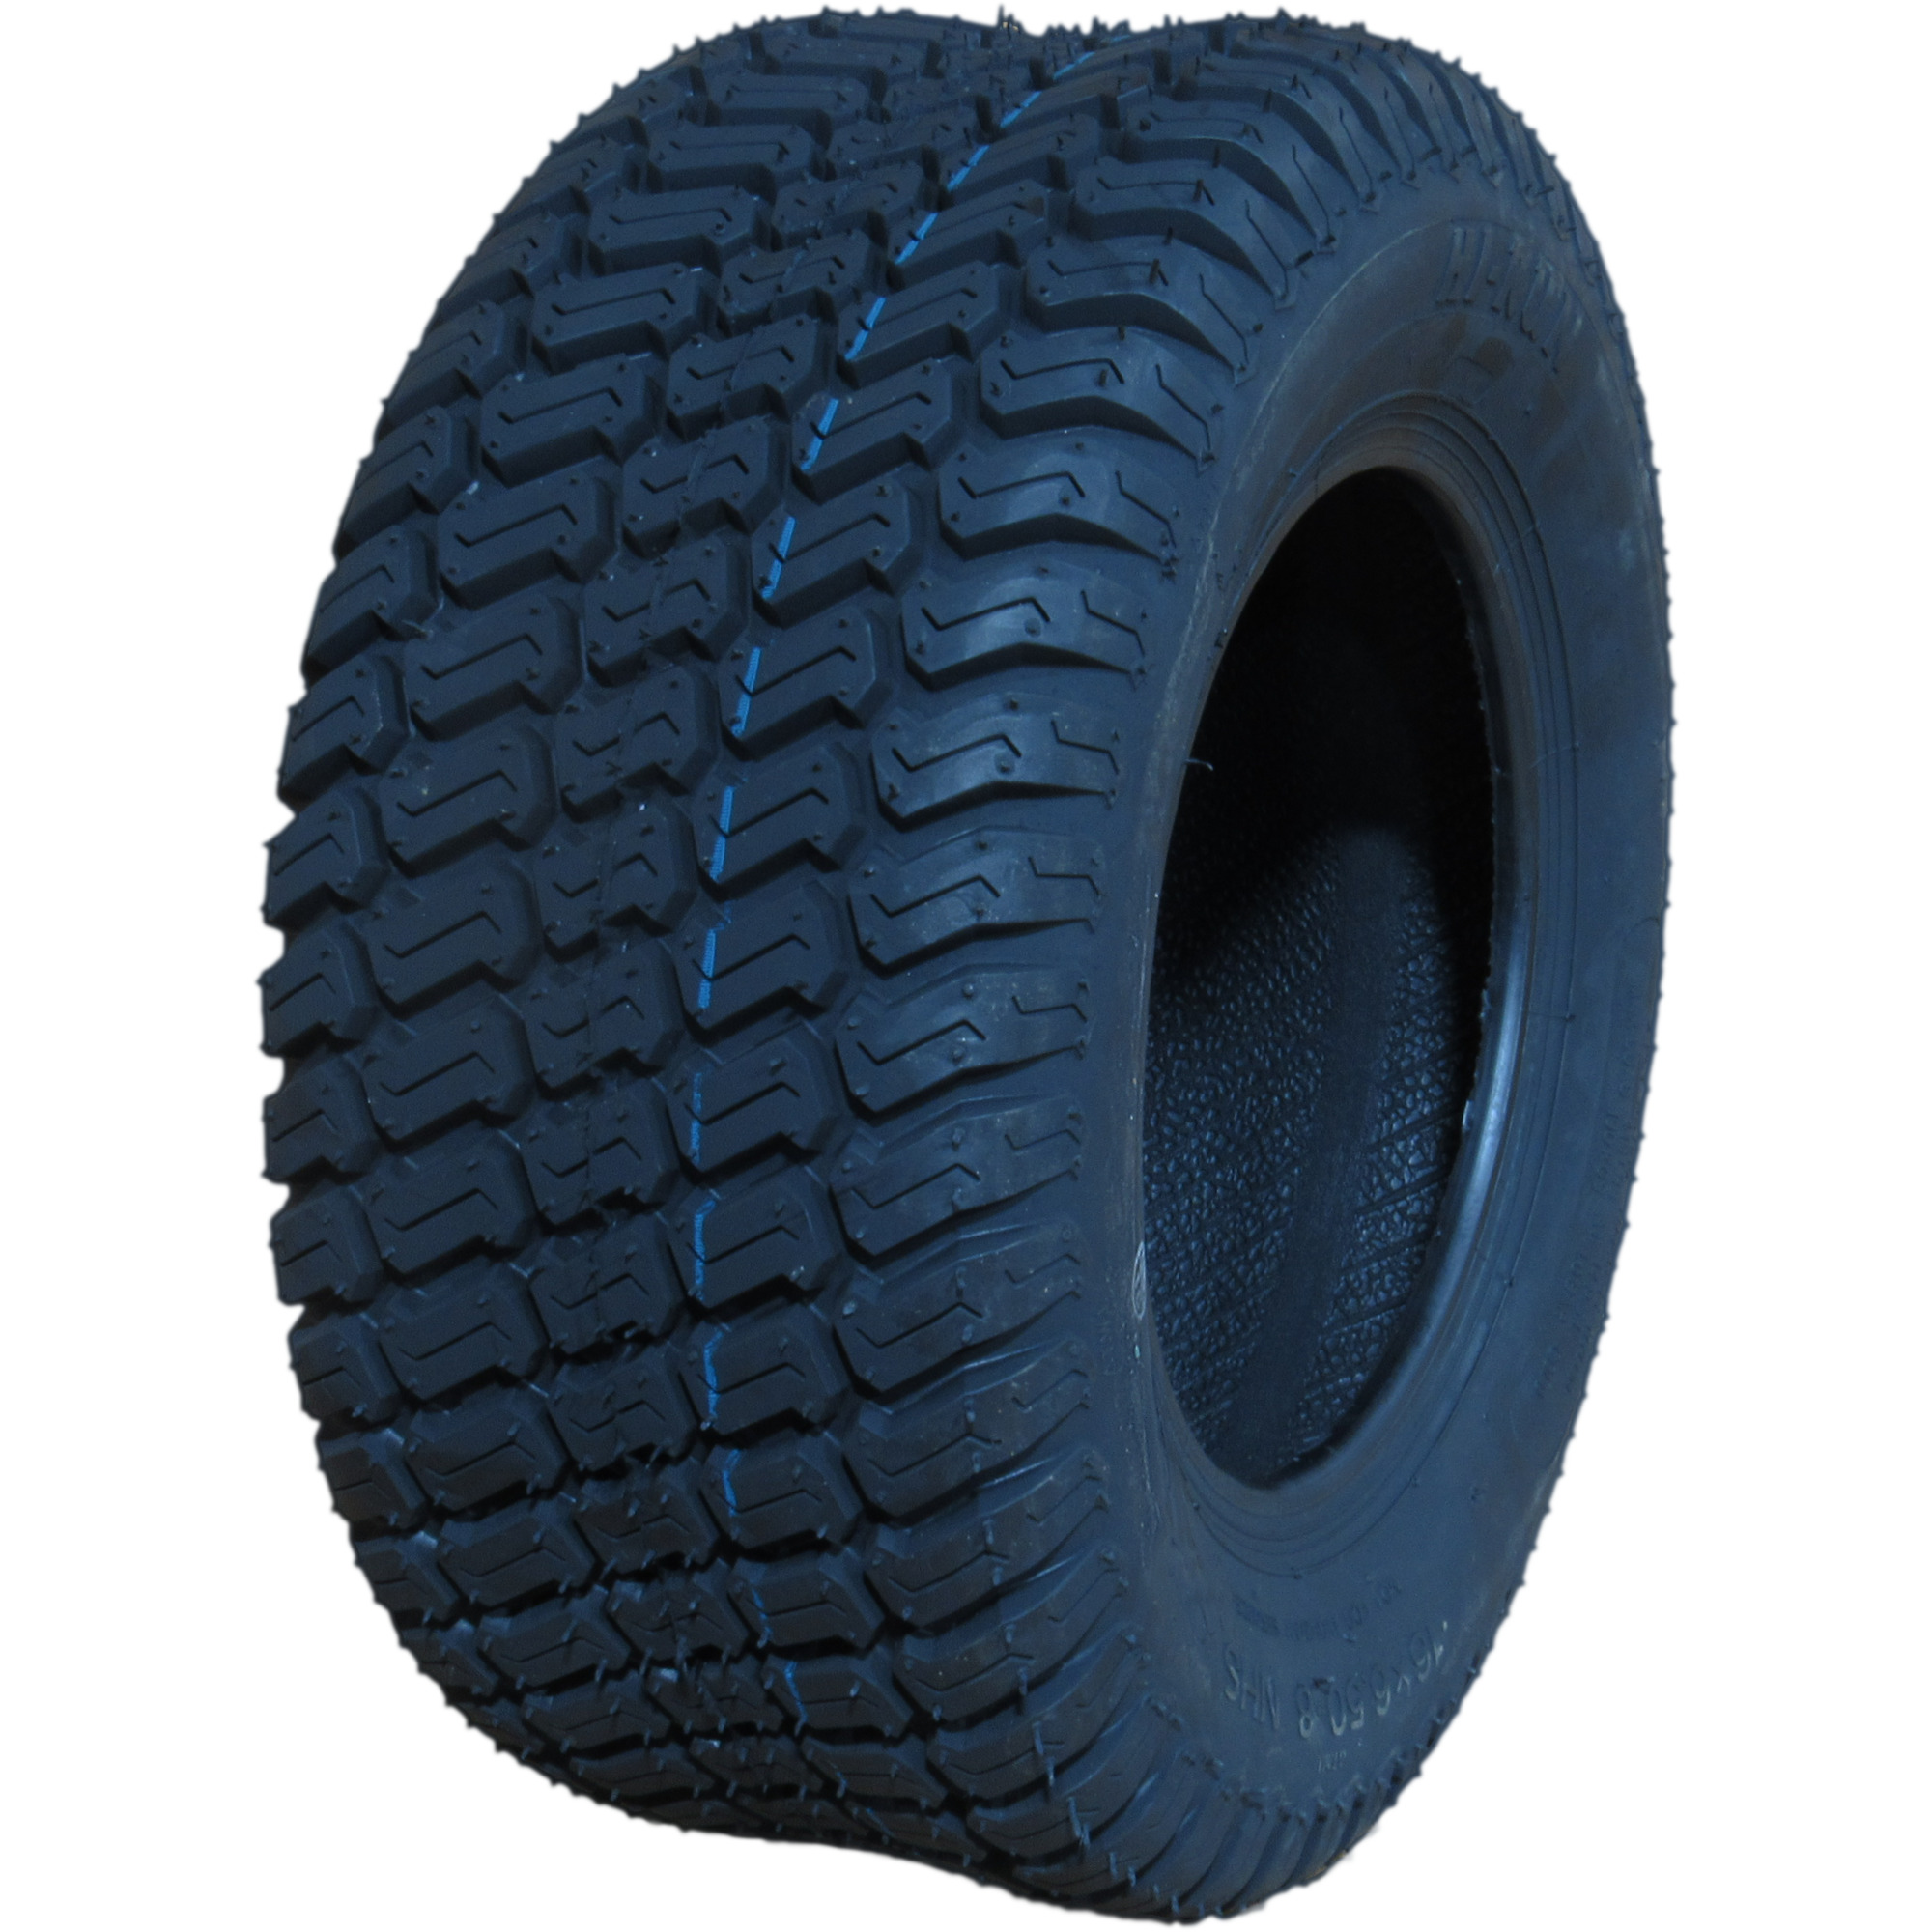 HI-RUN, Lawn Garden Tire, SU05 Turf, Tire Size 16X6.50-8 Load Range Rating A, Model WD1043